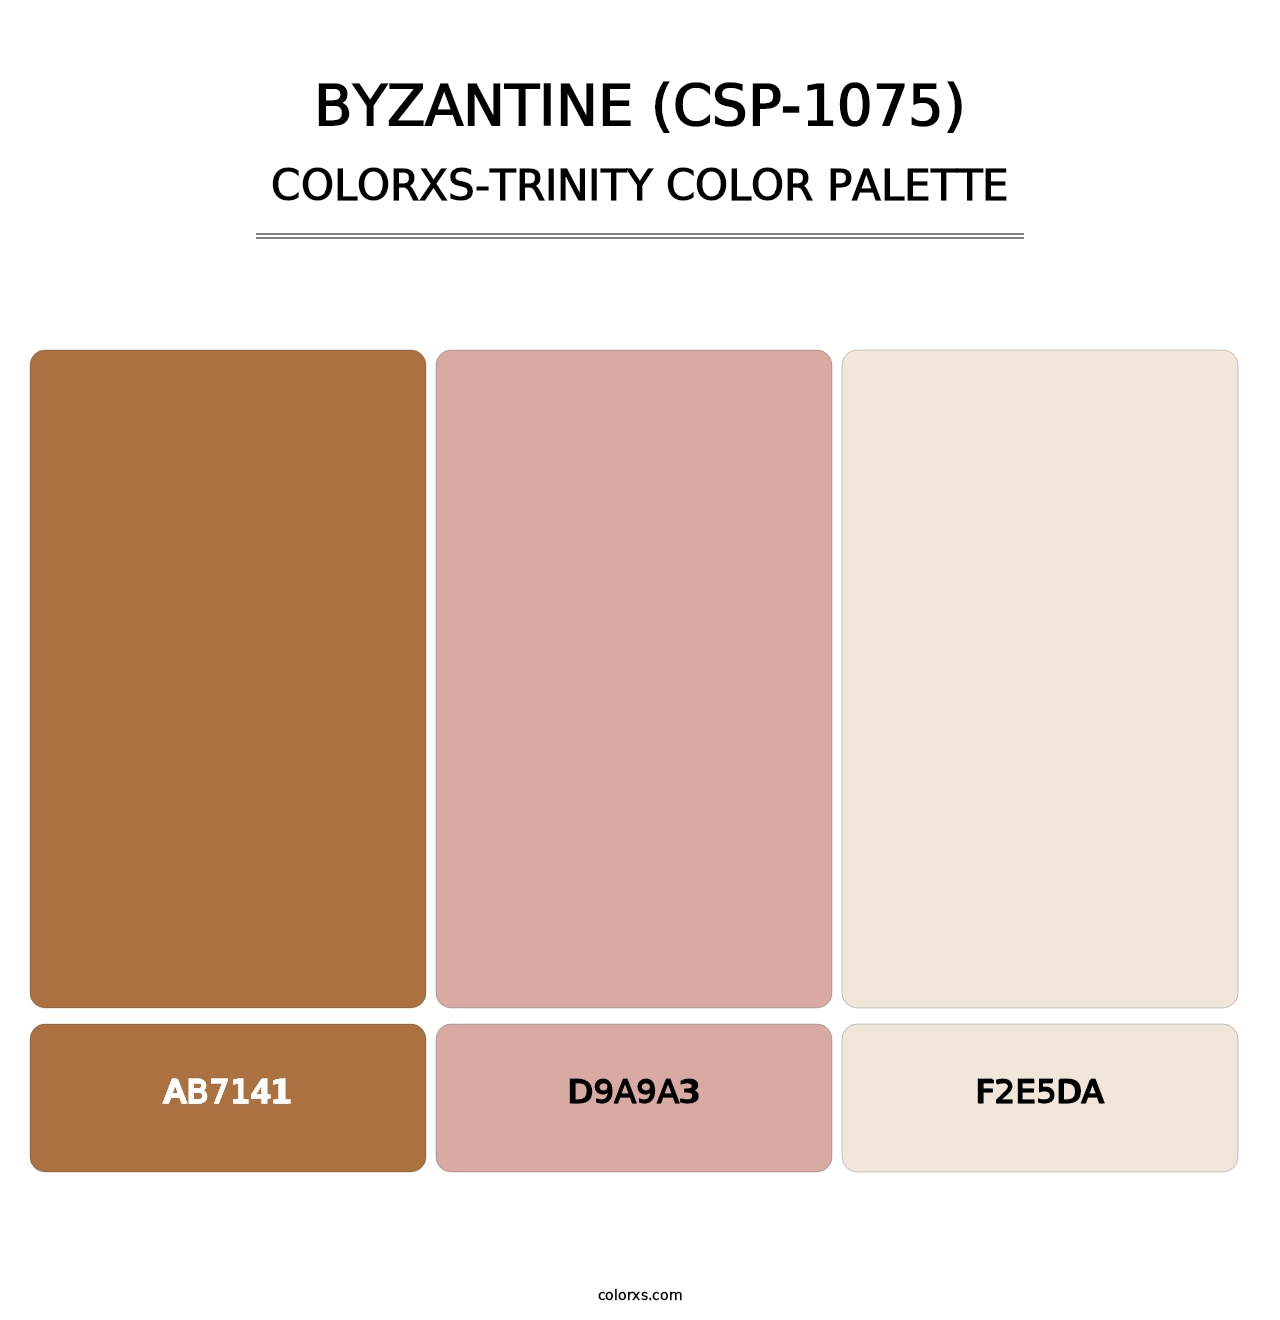 Byzantine (CSP-1075) - Colorxs Trinity Palette